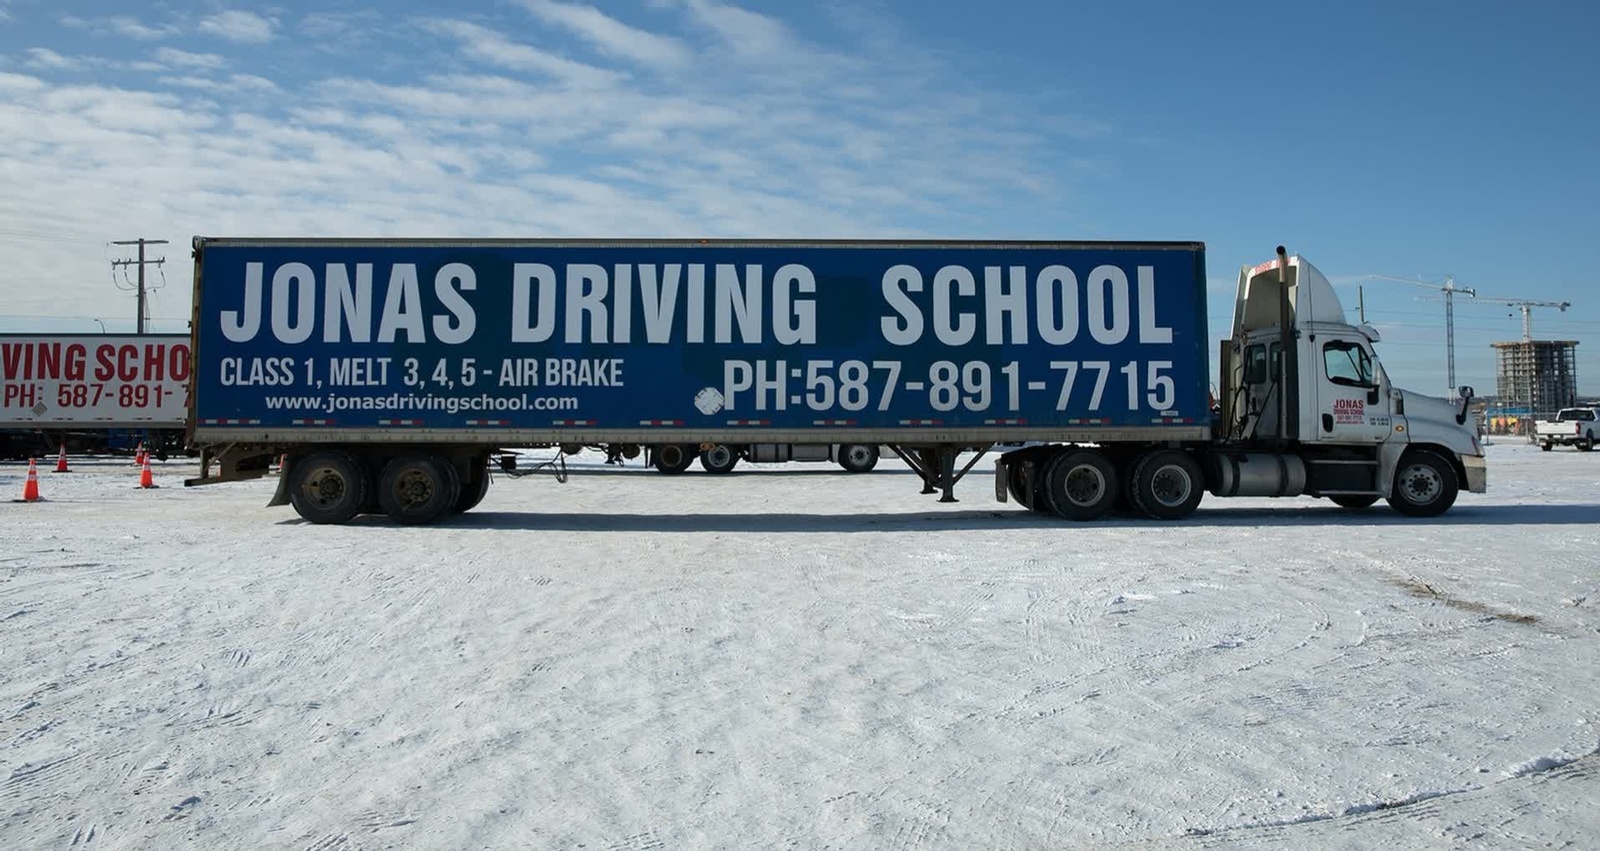 Jonas Driving School